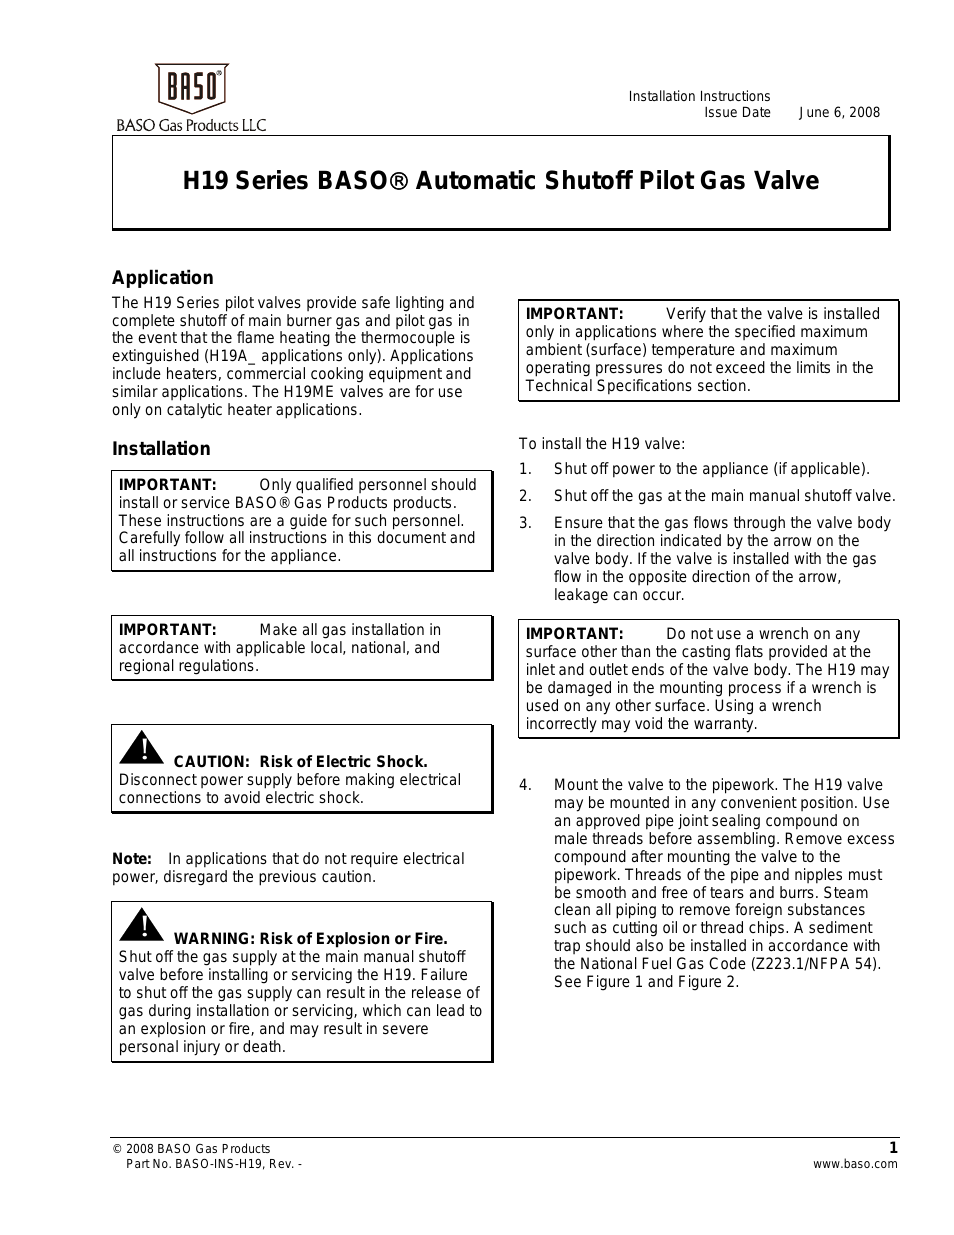 H19 Series Automatic Shutoff Pilot Gas Valve